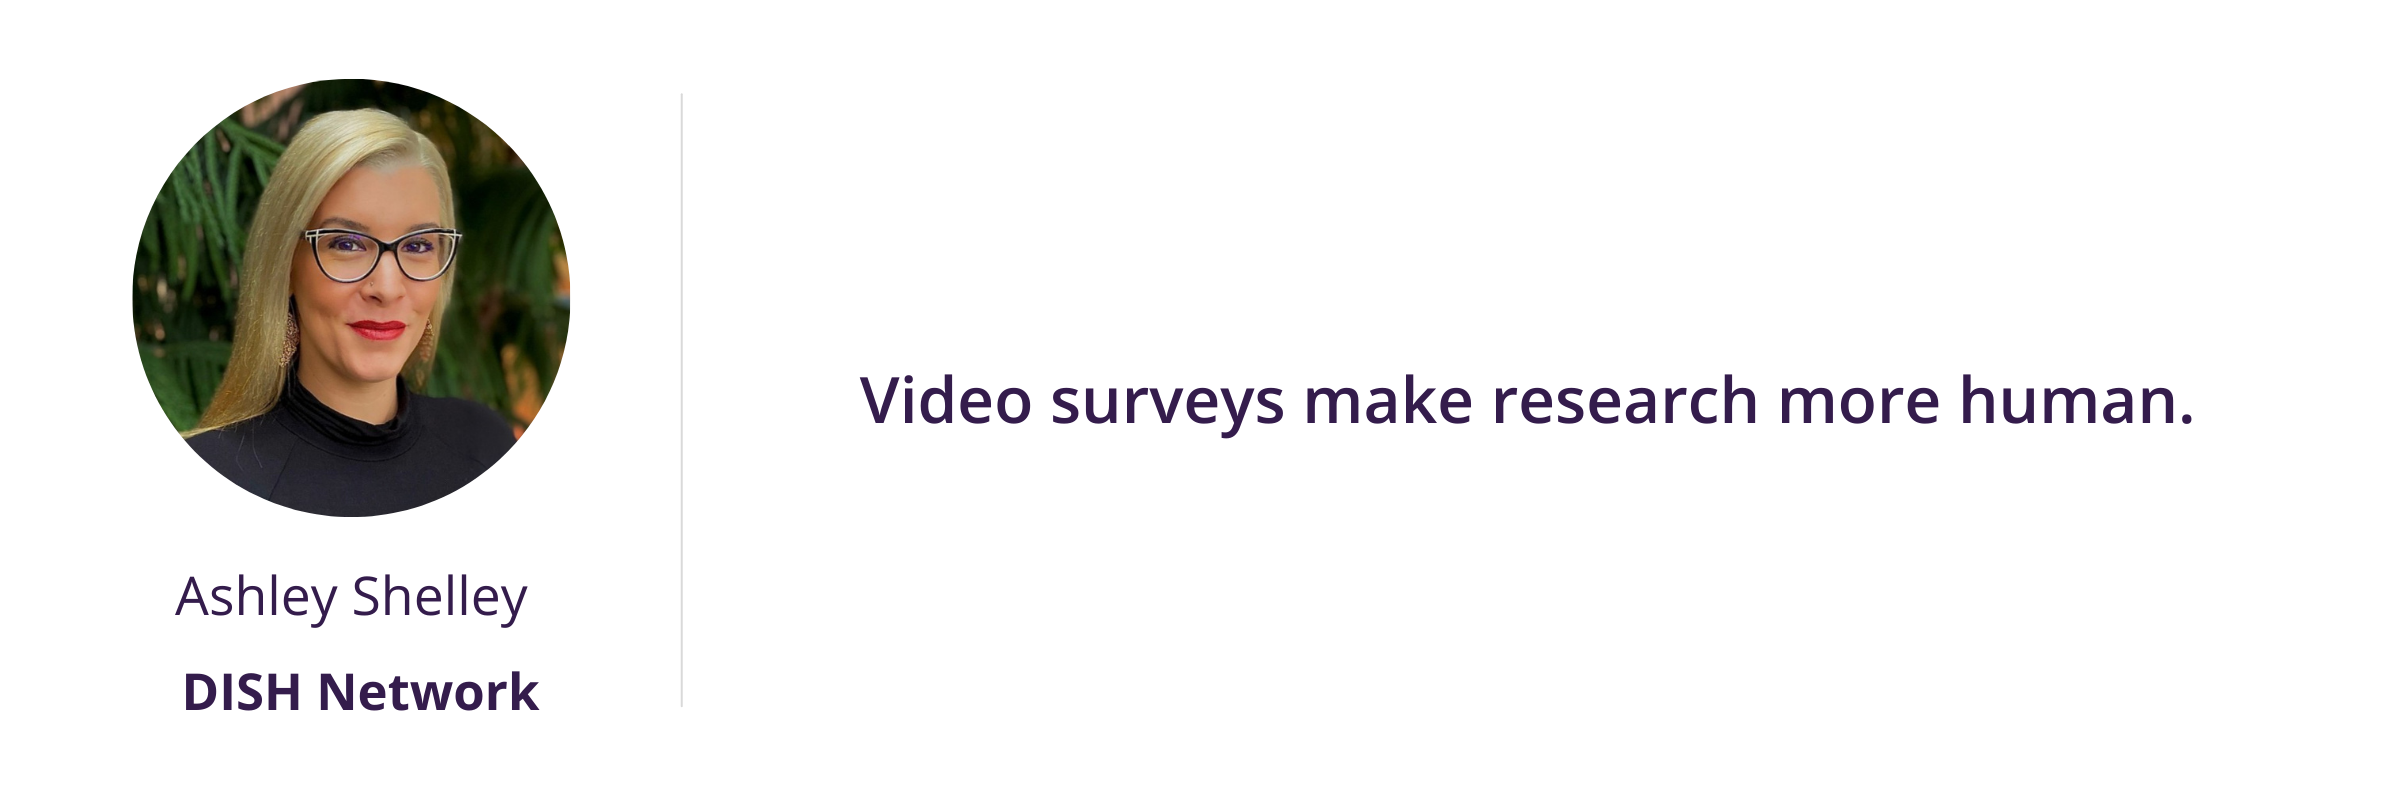 Video surveys make research more human. 